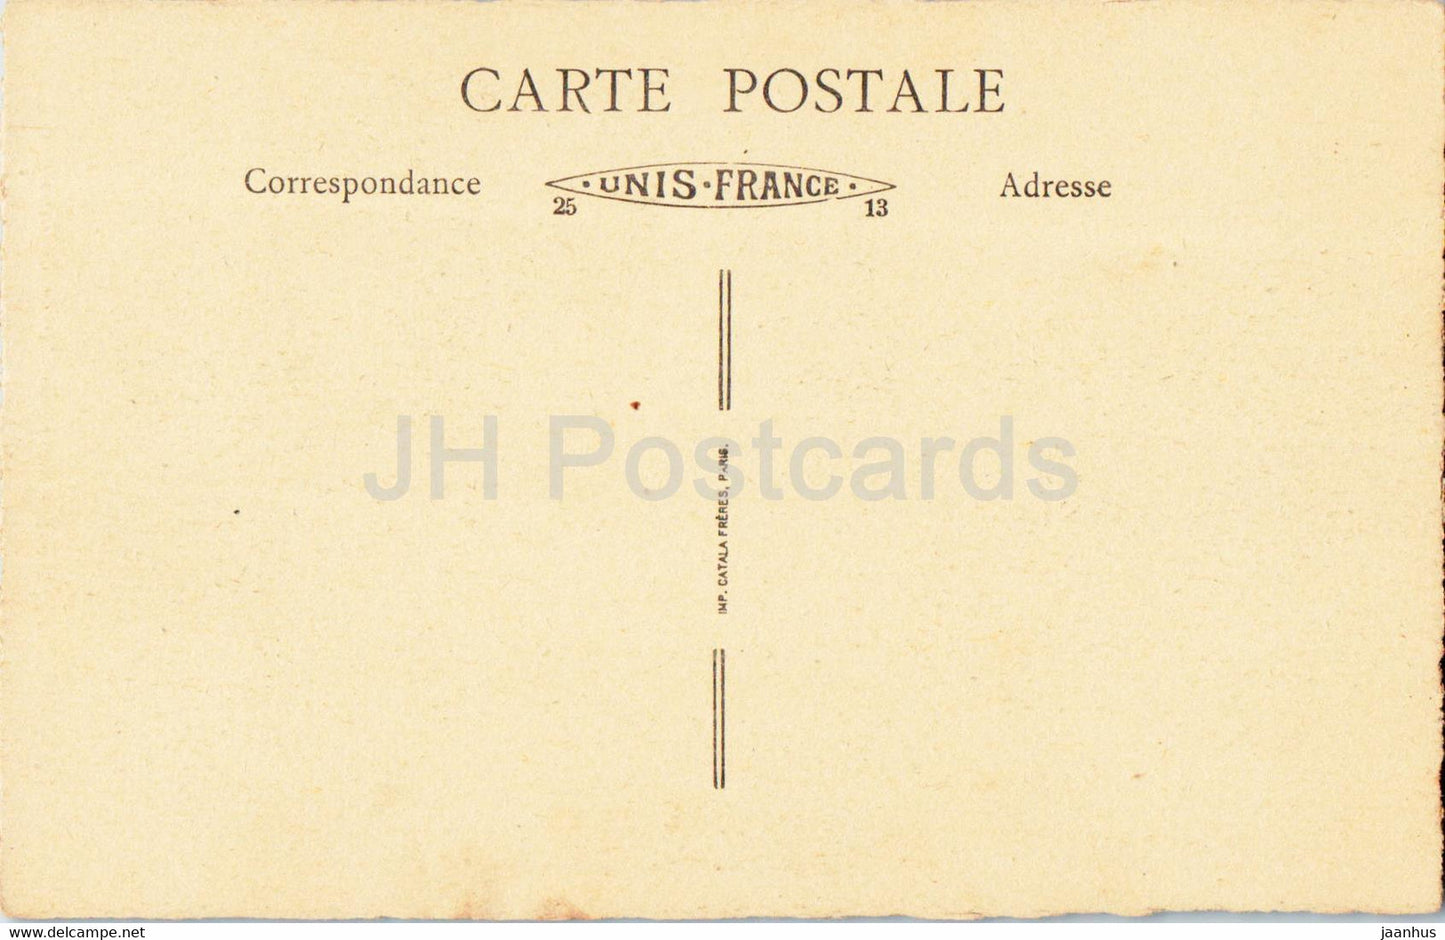 Charleville - Statue de Charles de Gonzague - monument - 34 - old postcard - France - unused